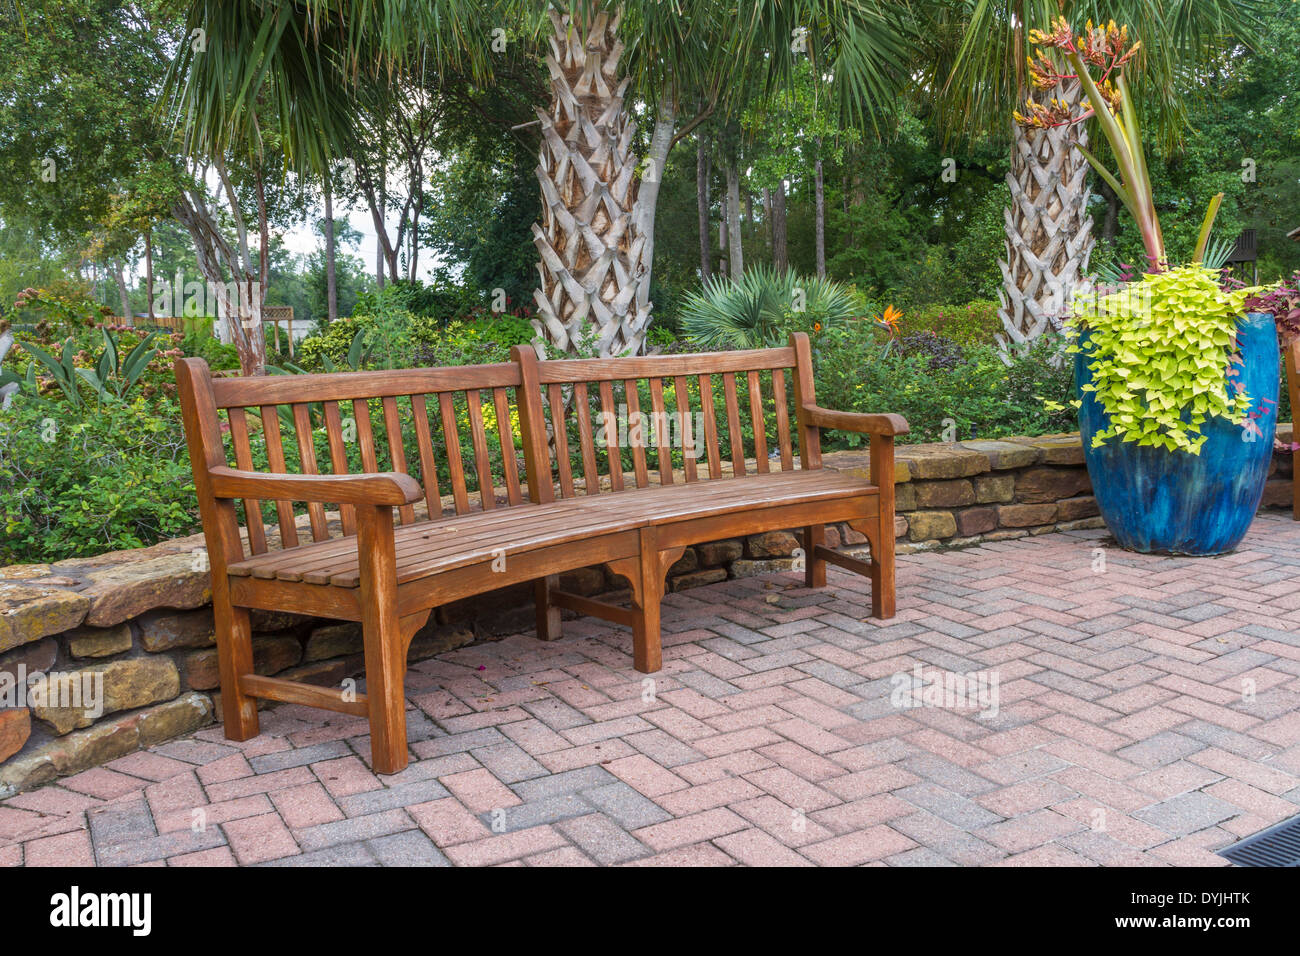 Garden scene with wooden bench Stock Photo